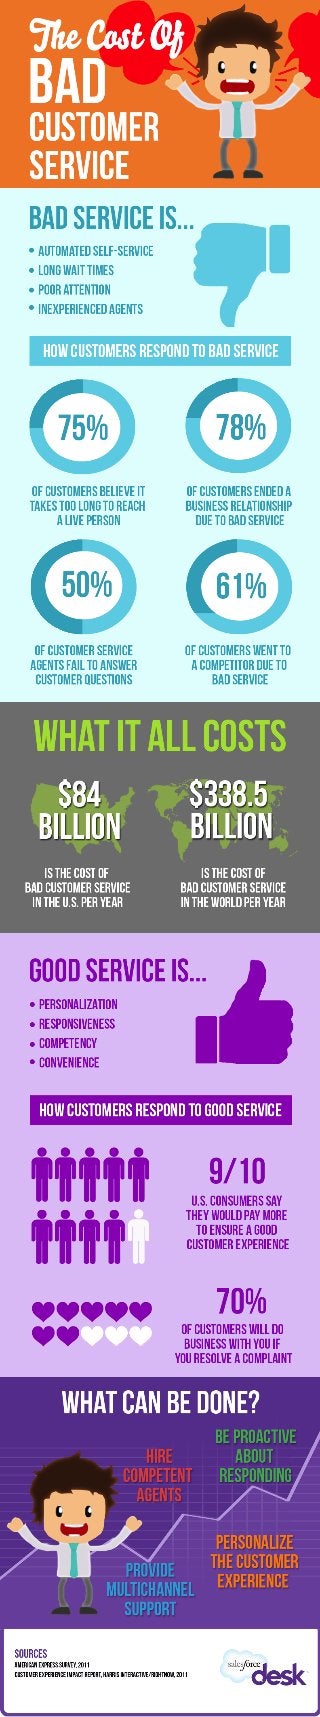 The True Cost of Bad Customer Service